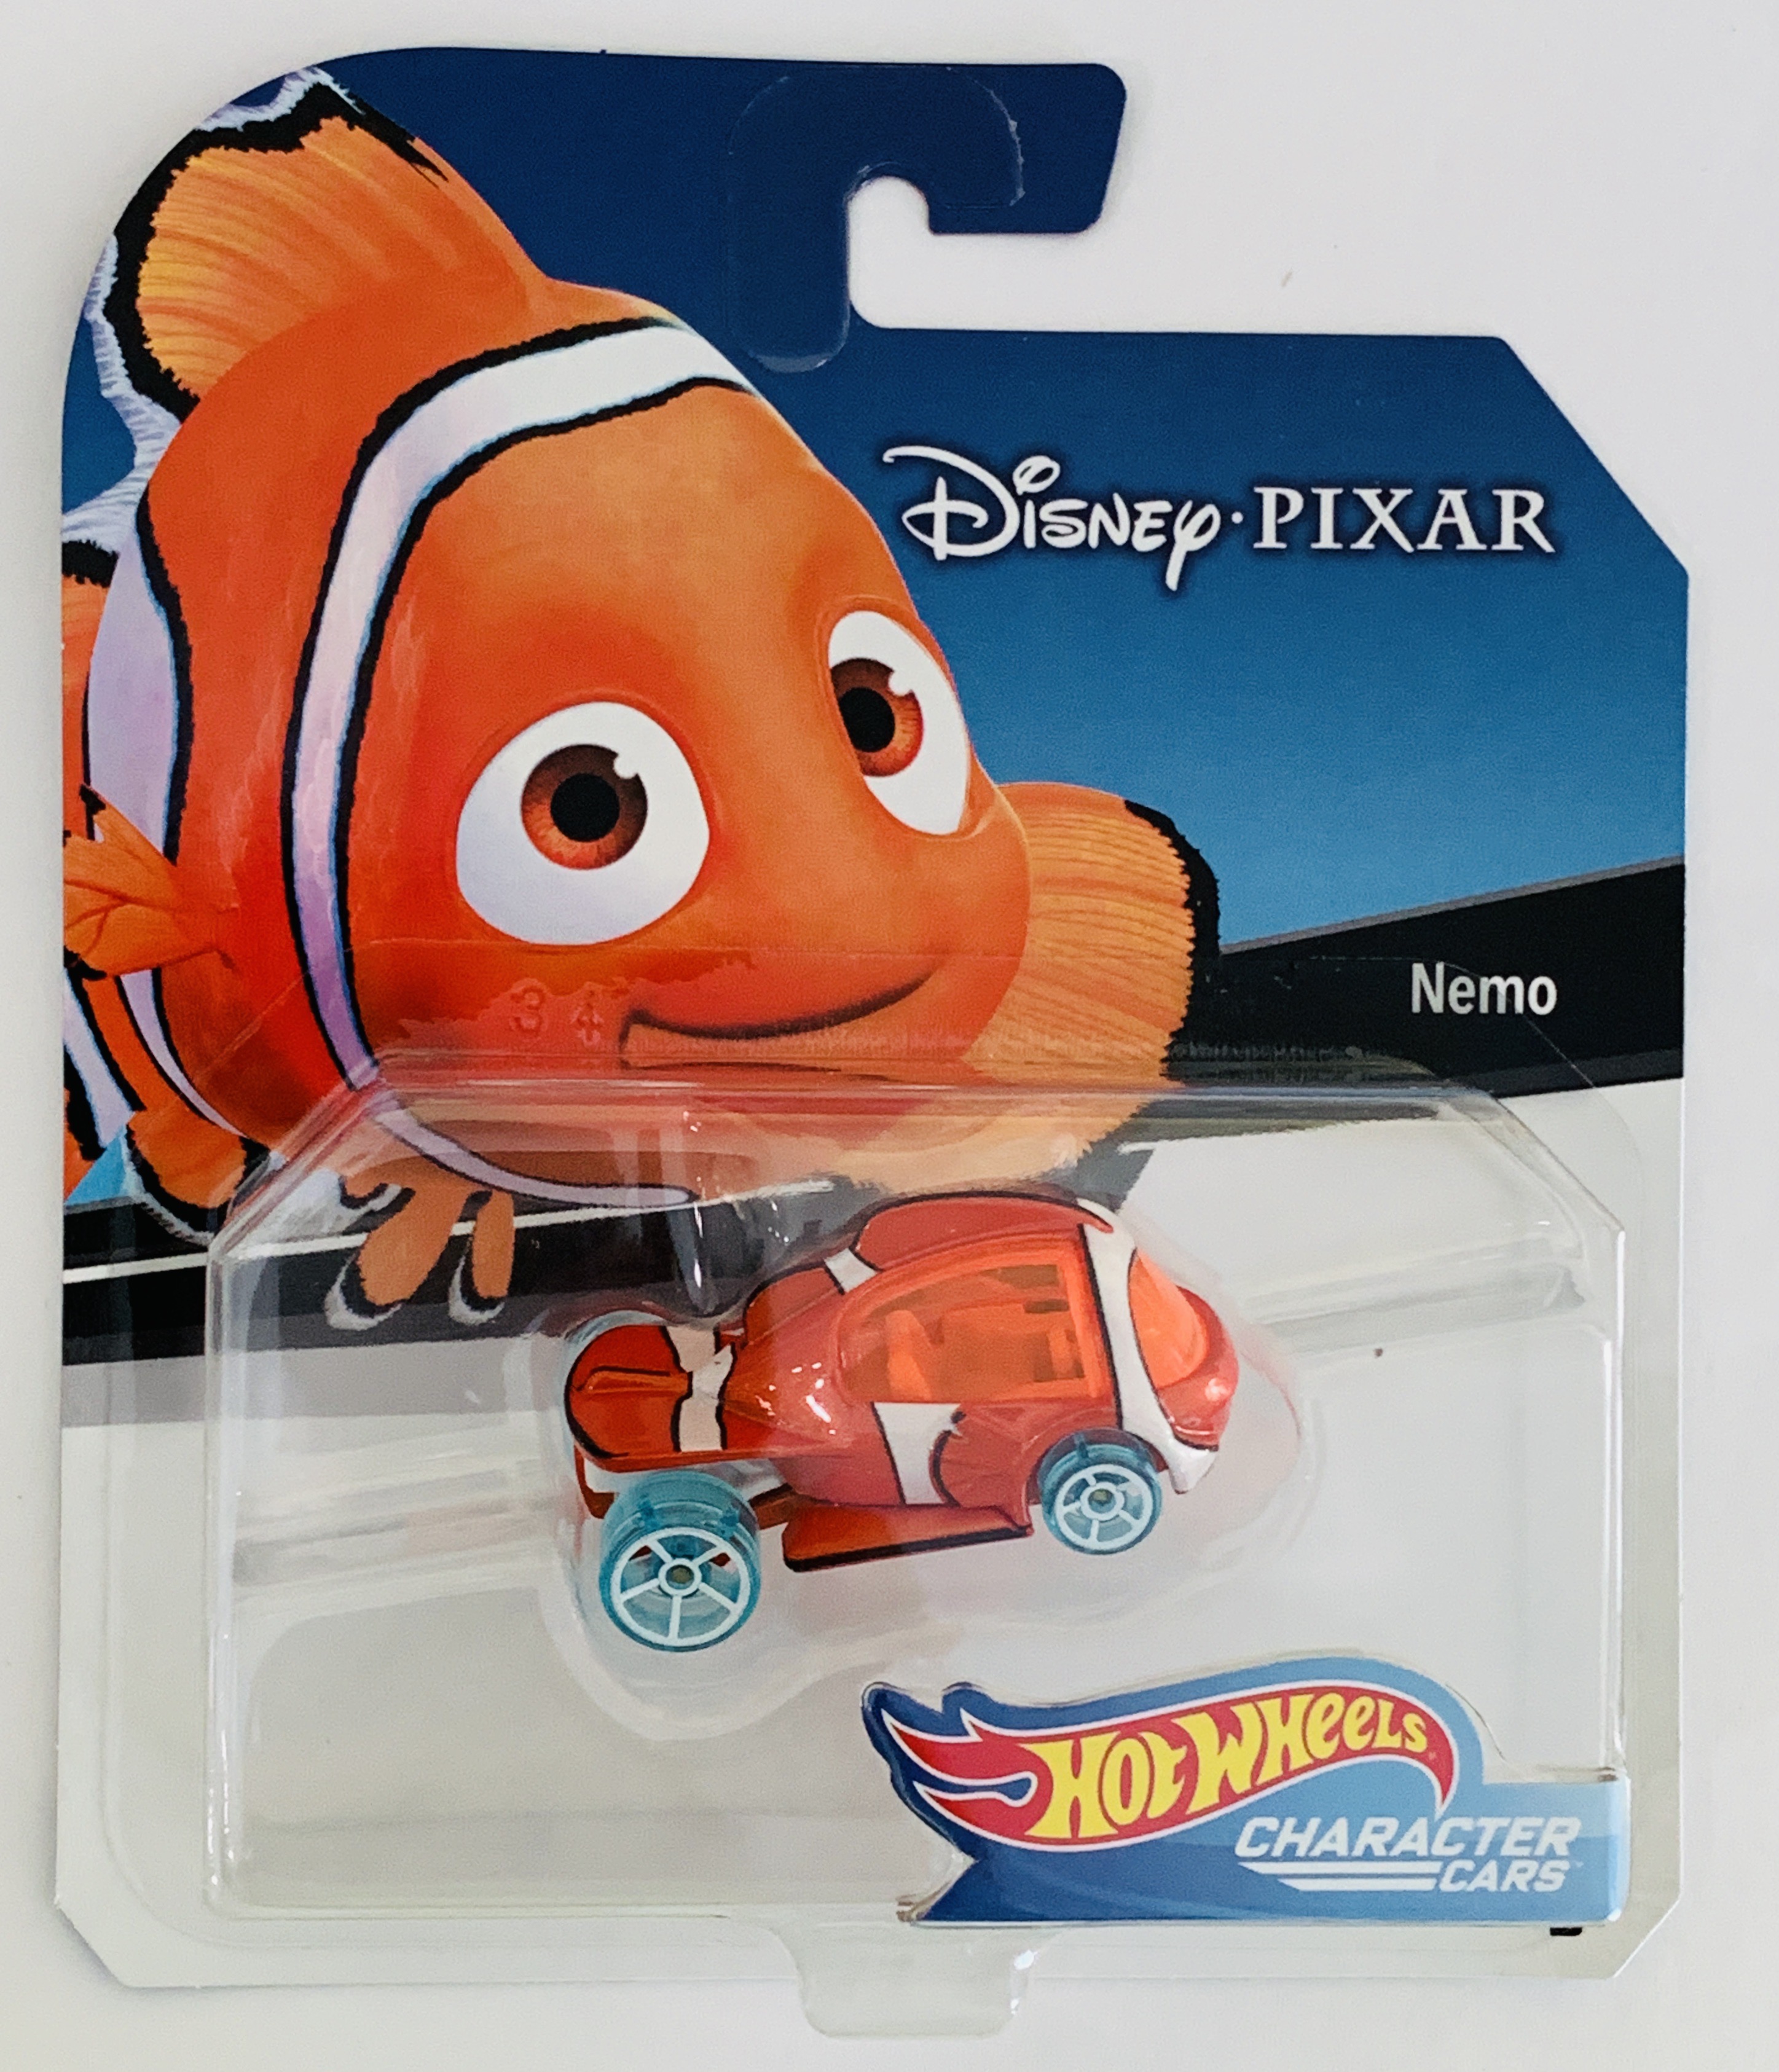 Hot Wheels Series 2 Disney Pixar Character Cars Nemo